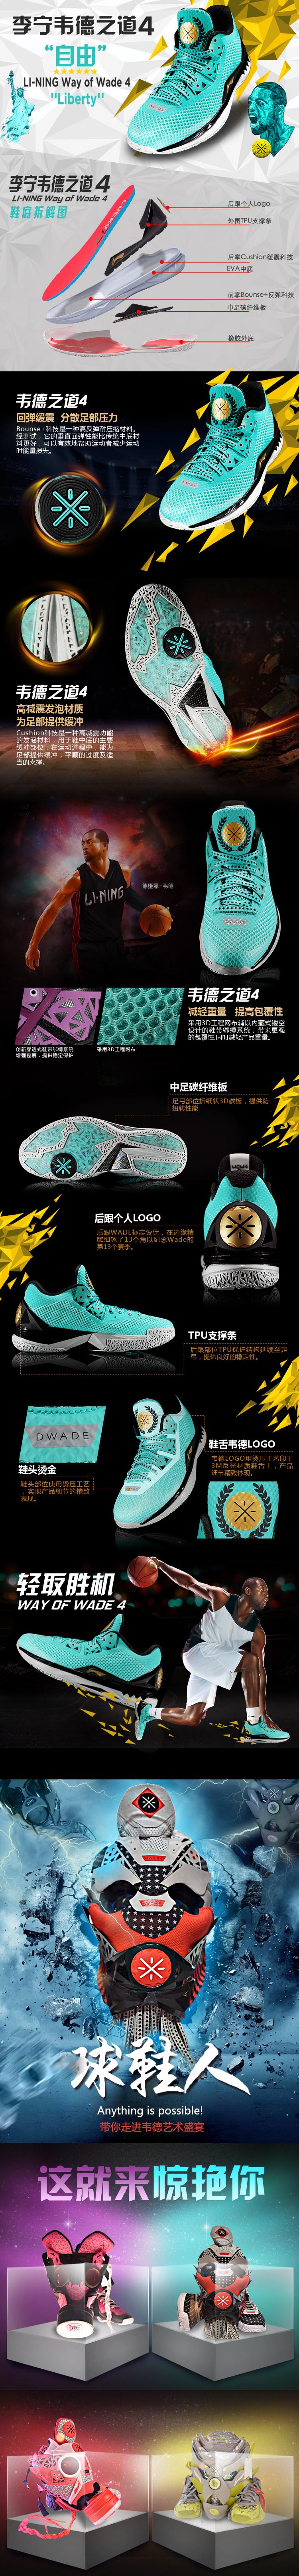 Li-Ning WoW4 Way of Wade 4 "Liberty" Premium Basketball Shoes